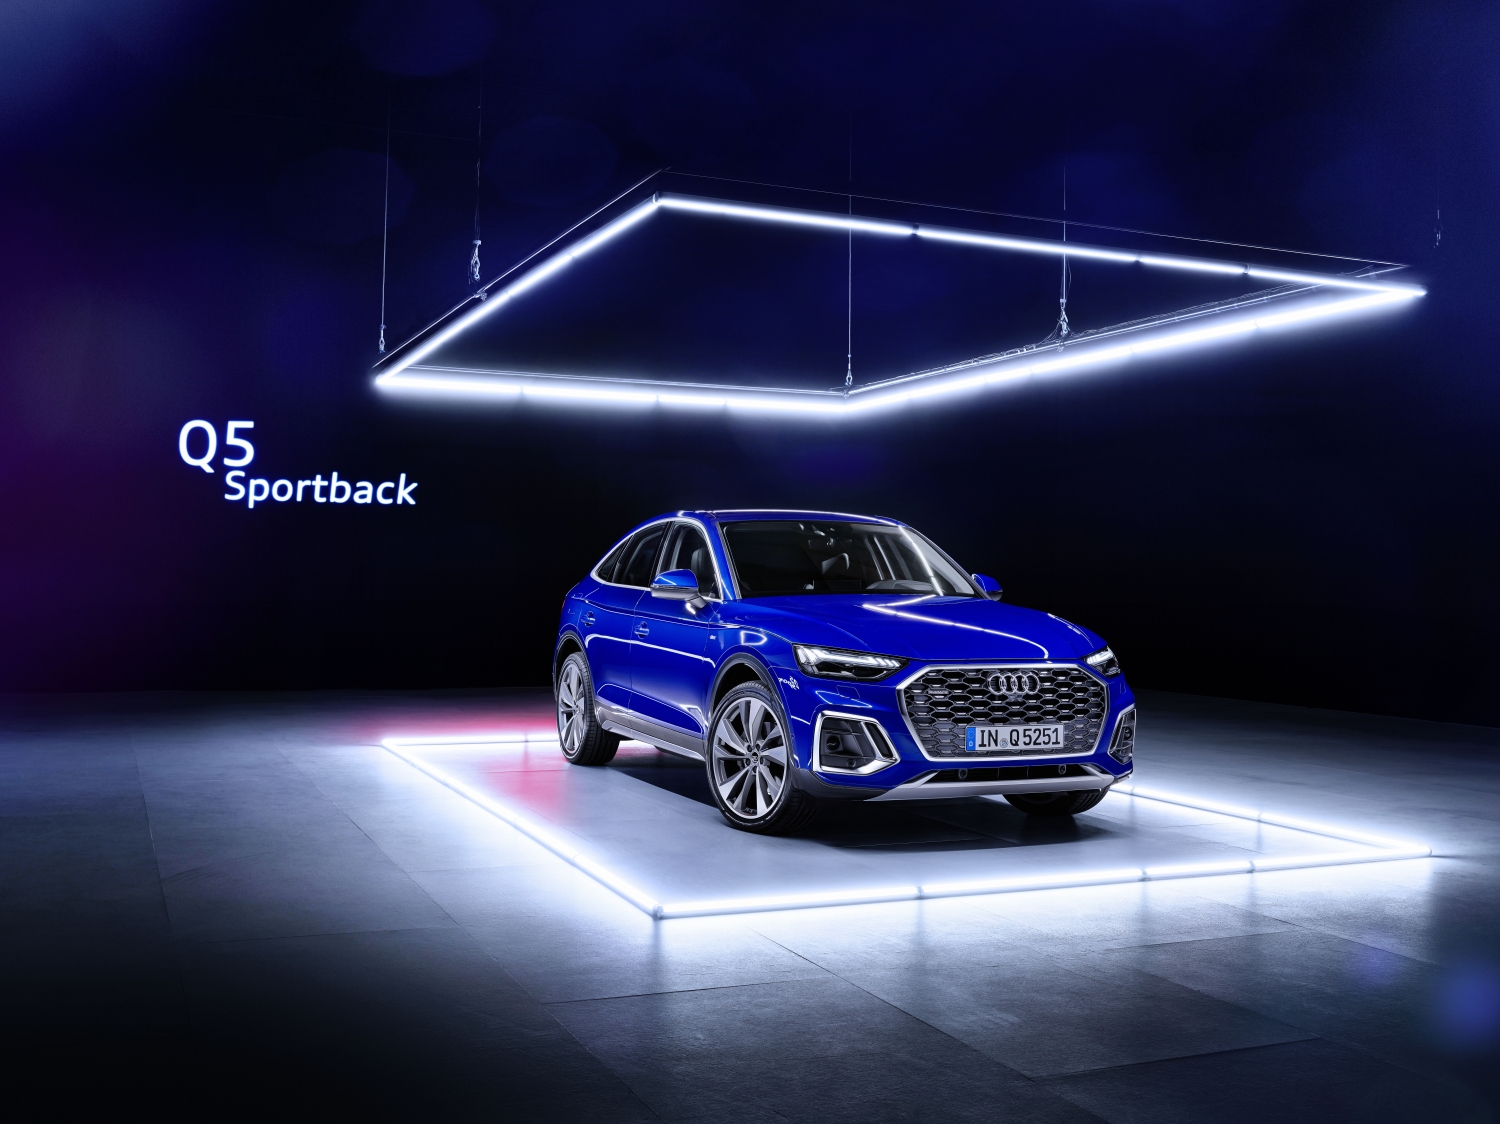 Audi reveals the Audi Q5 Sportback